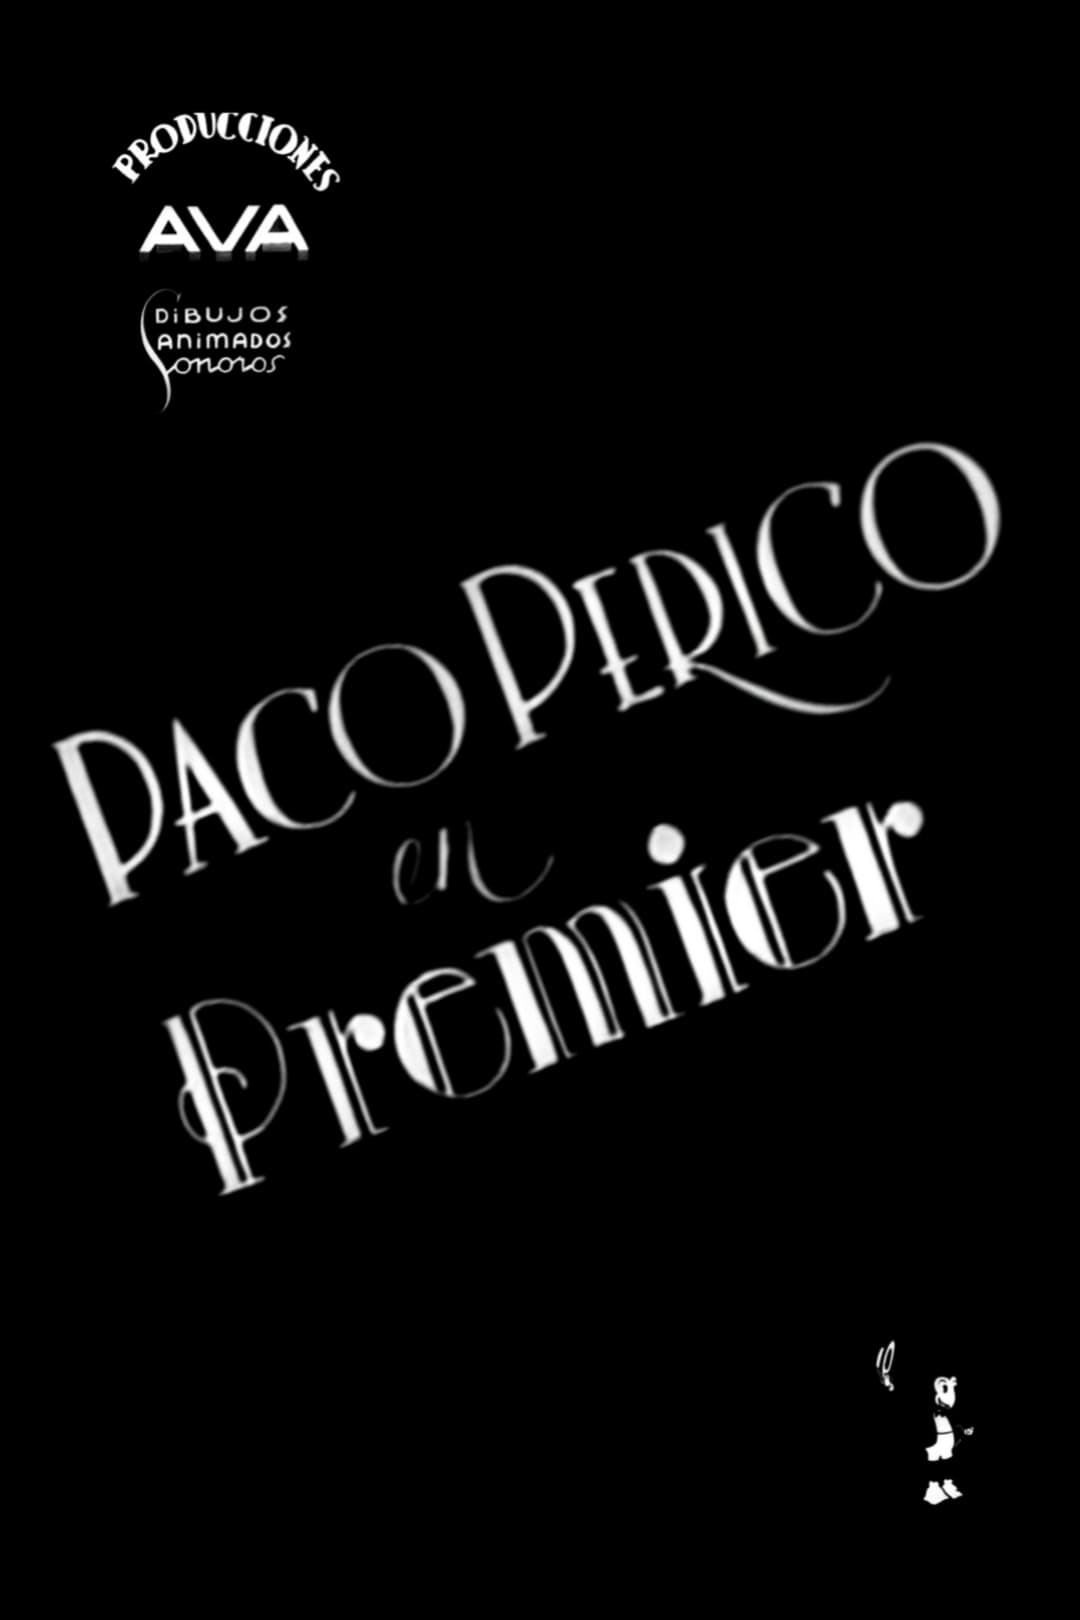 Paco Perico in Premiere